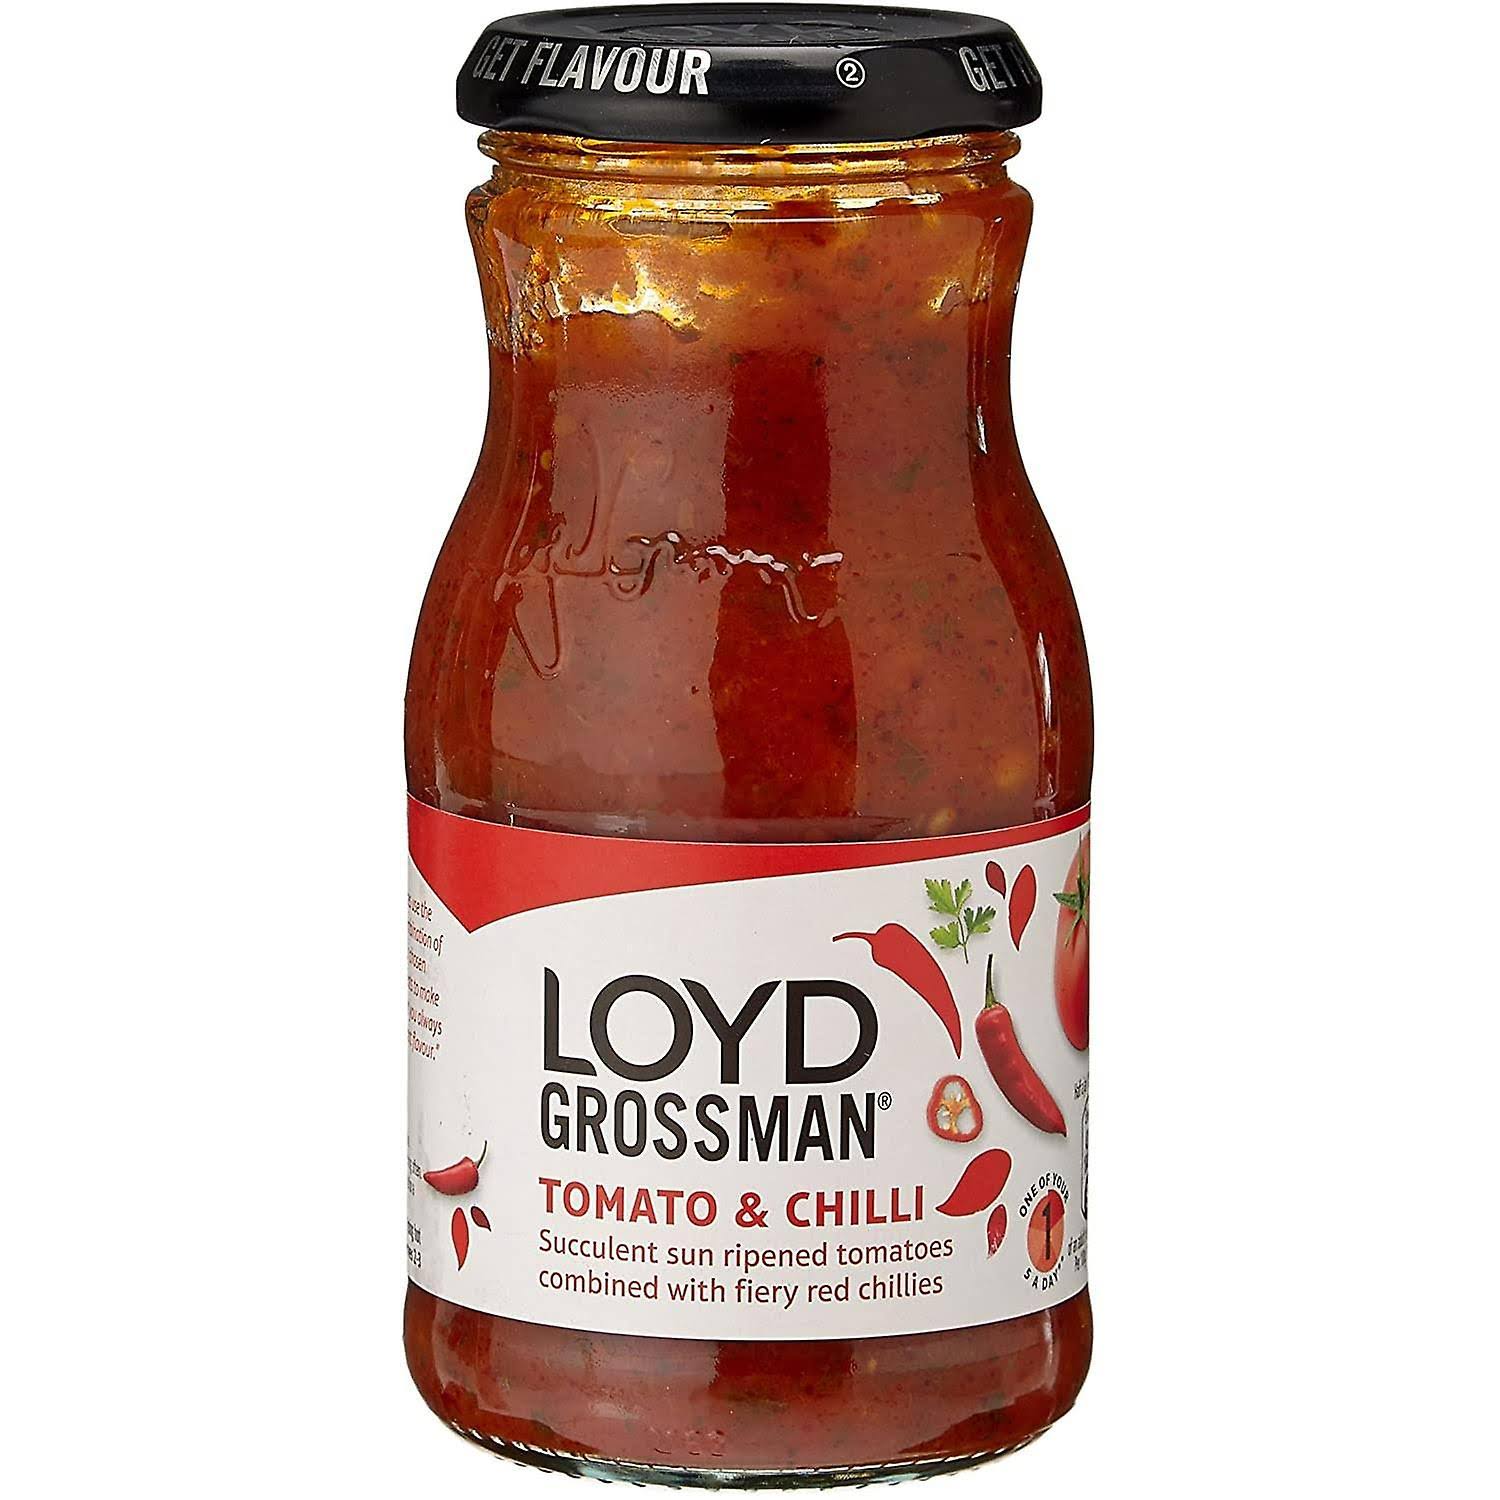 Loyd Grossman Tomato & Chilli Sauce 350g 1 Bottle